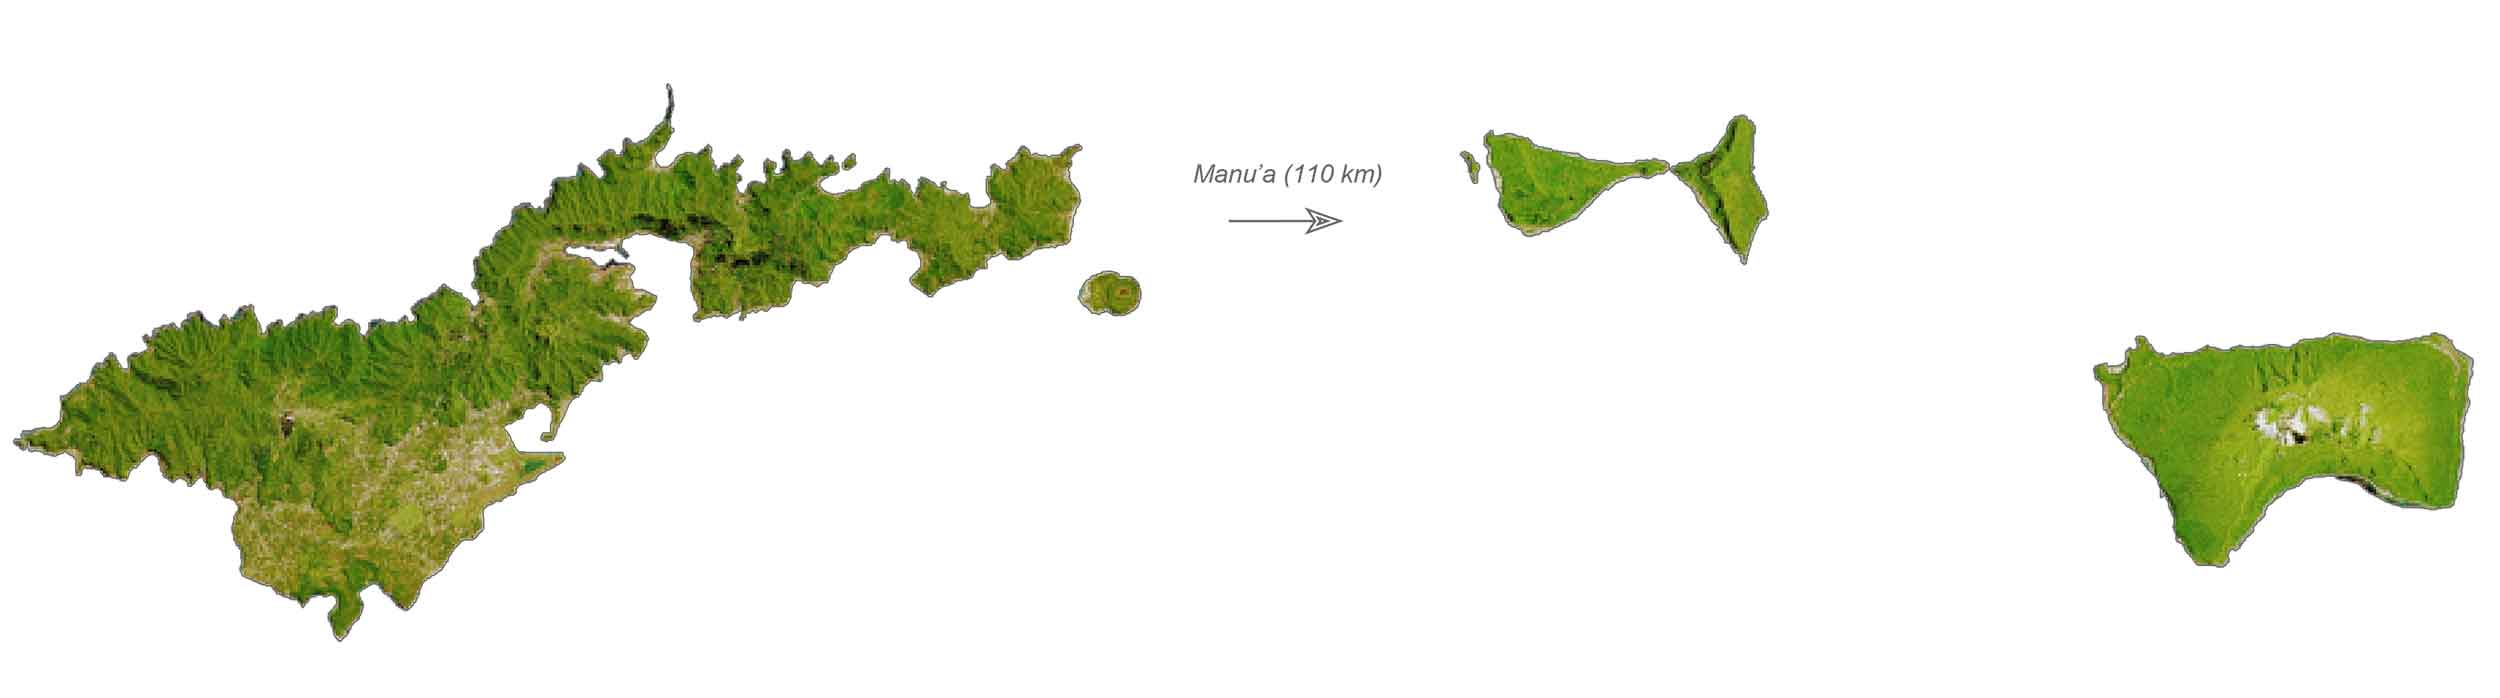 American Samoa Satellite Map